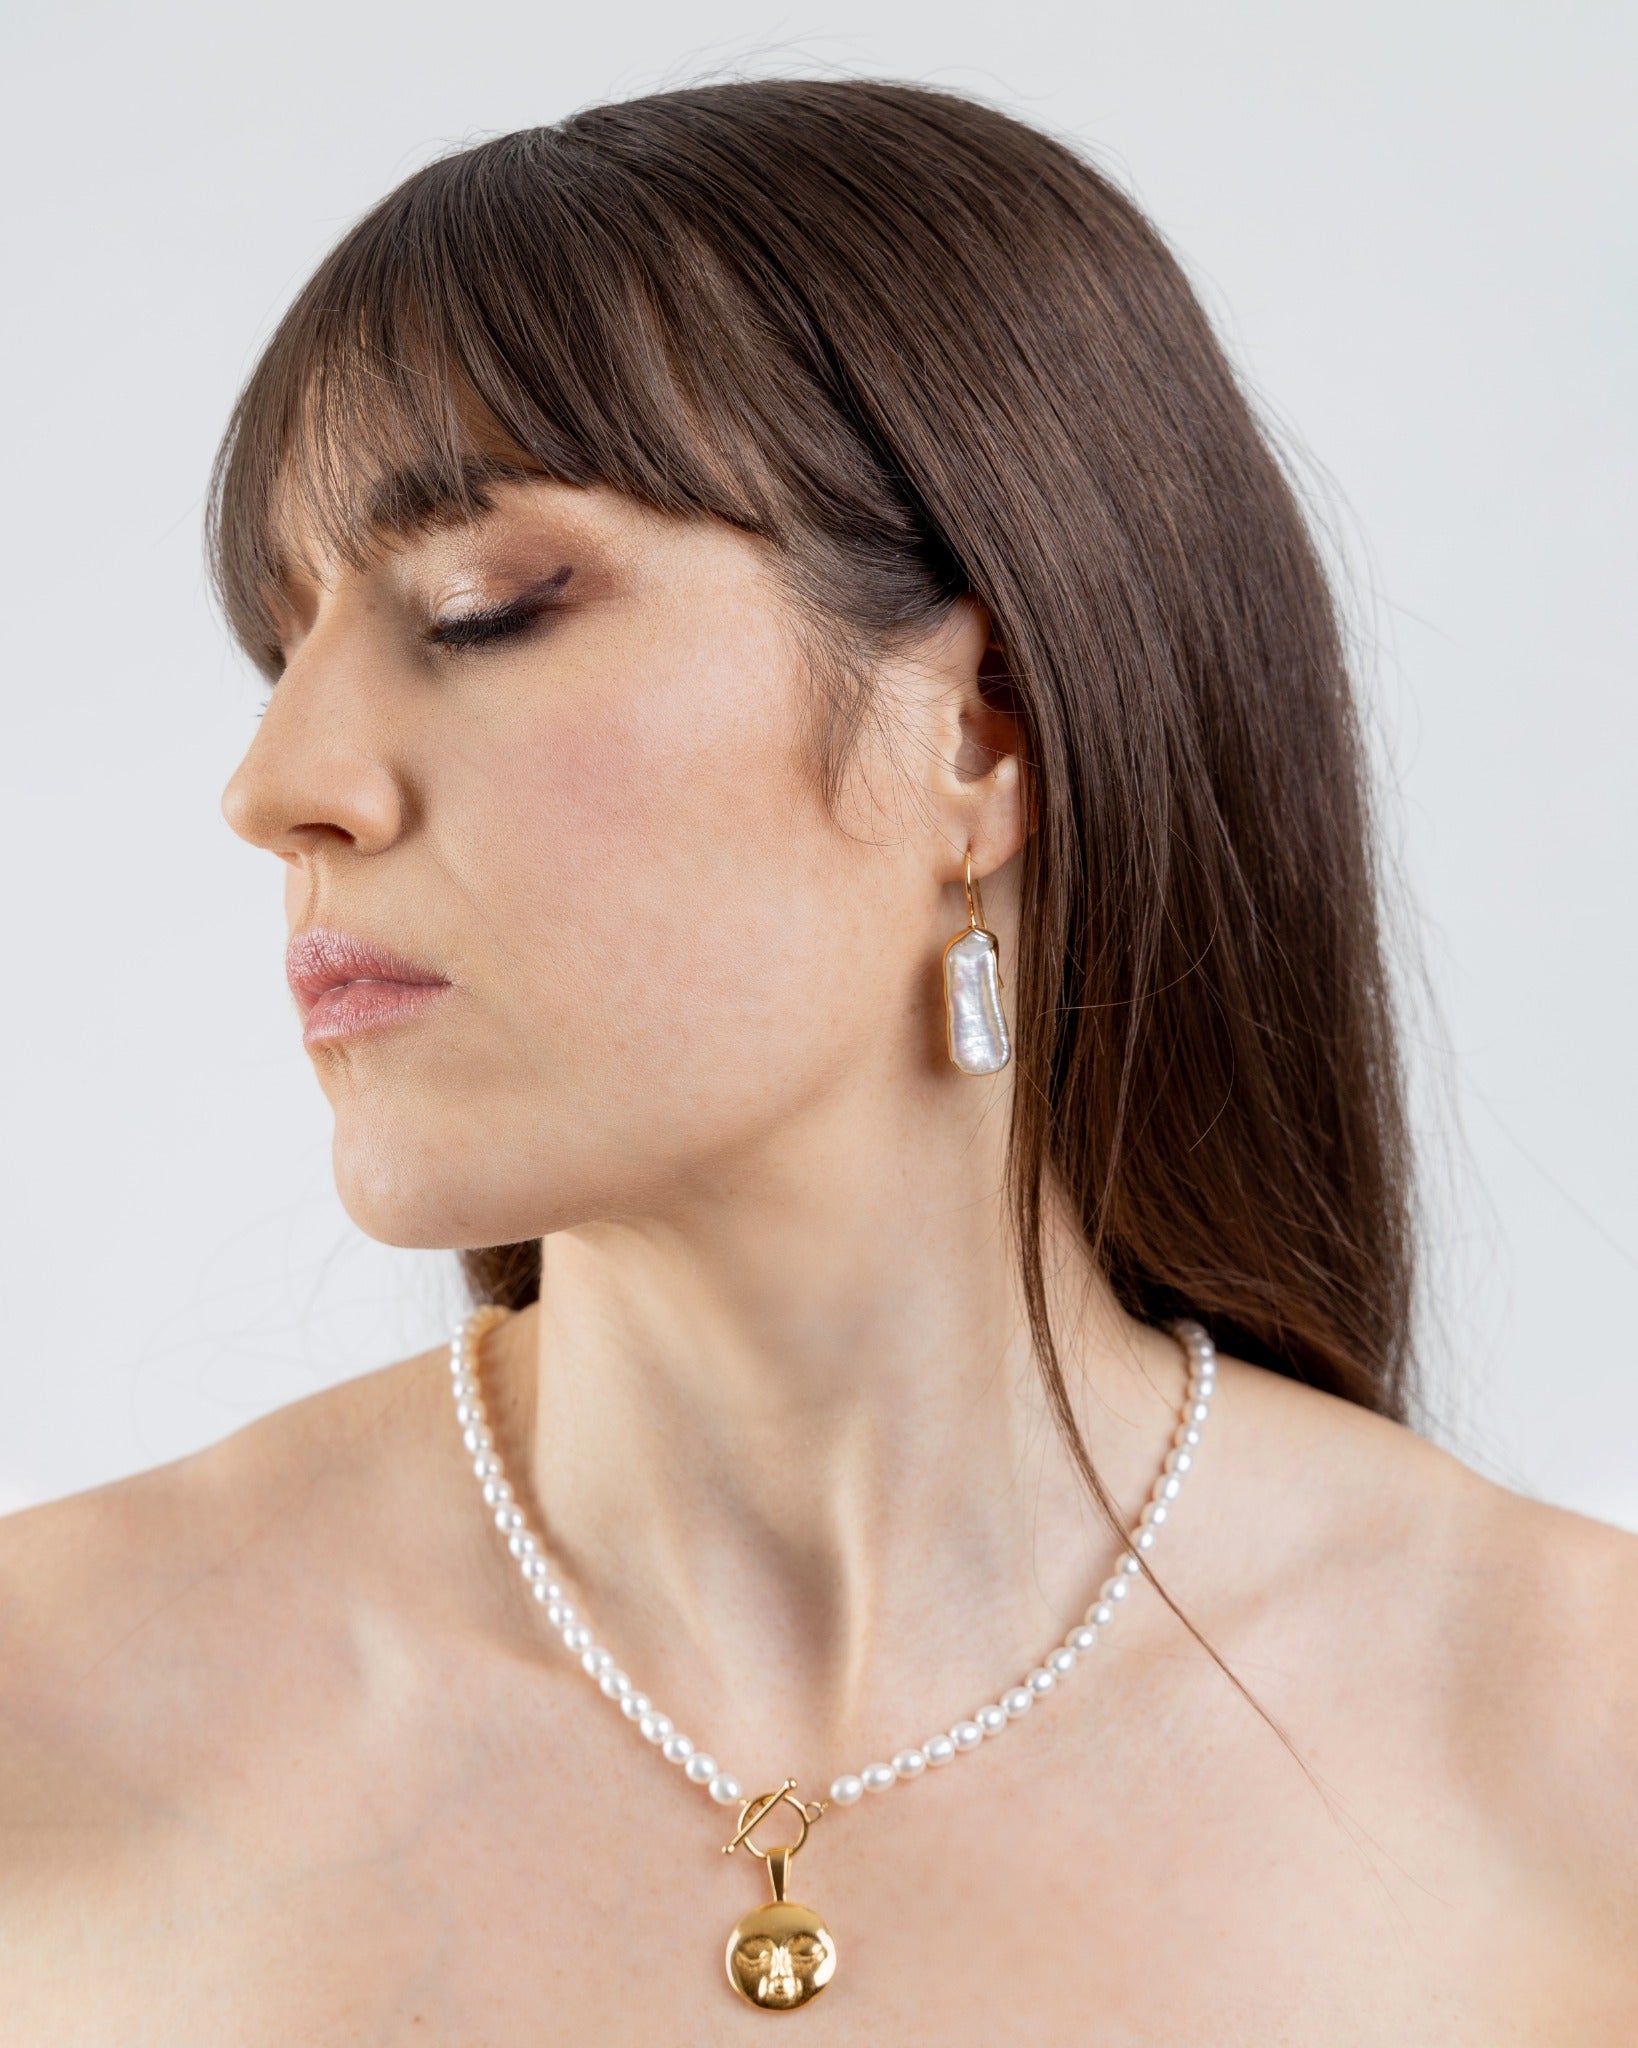 Tiffany solder Necklace, evil eye necklace, silver necklace, labradorite  necklace, creaent moon necklace